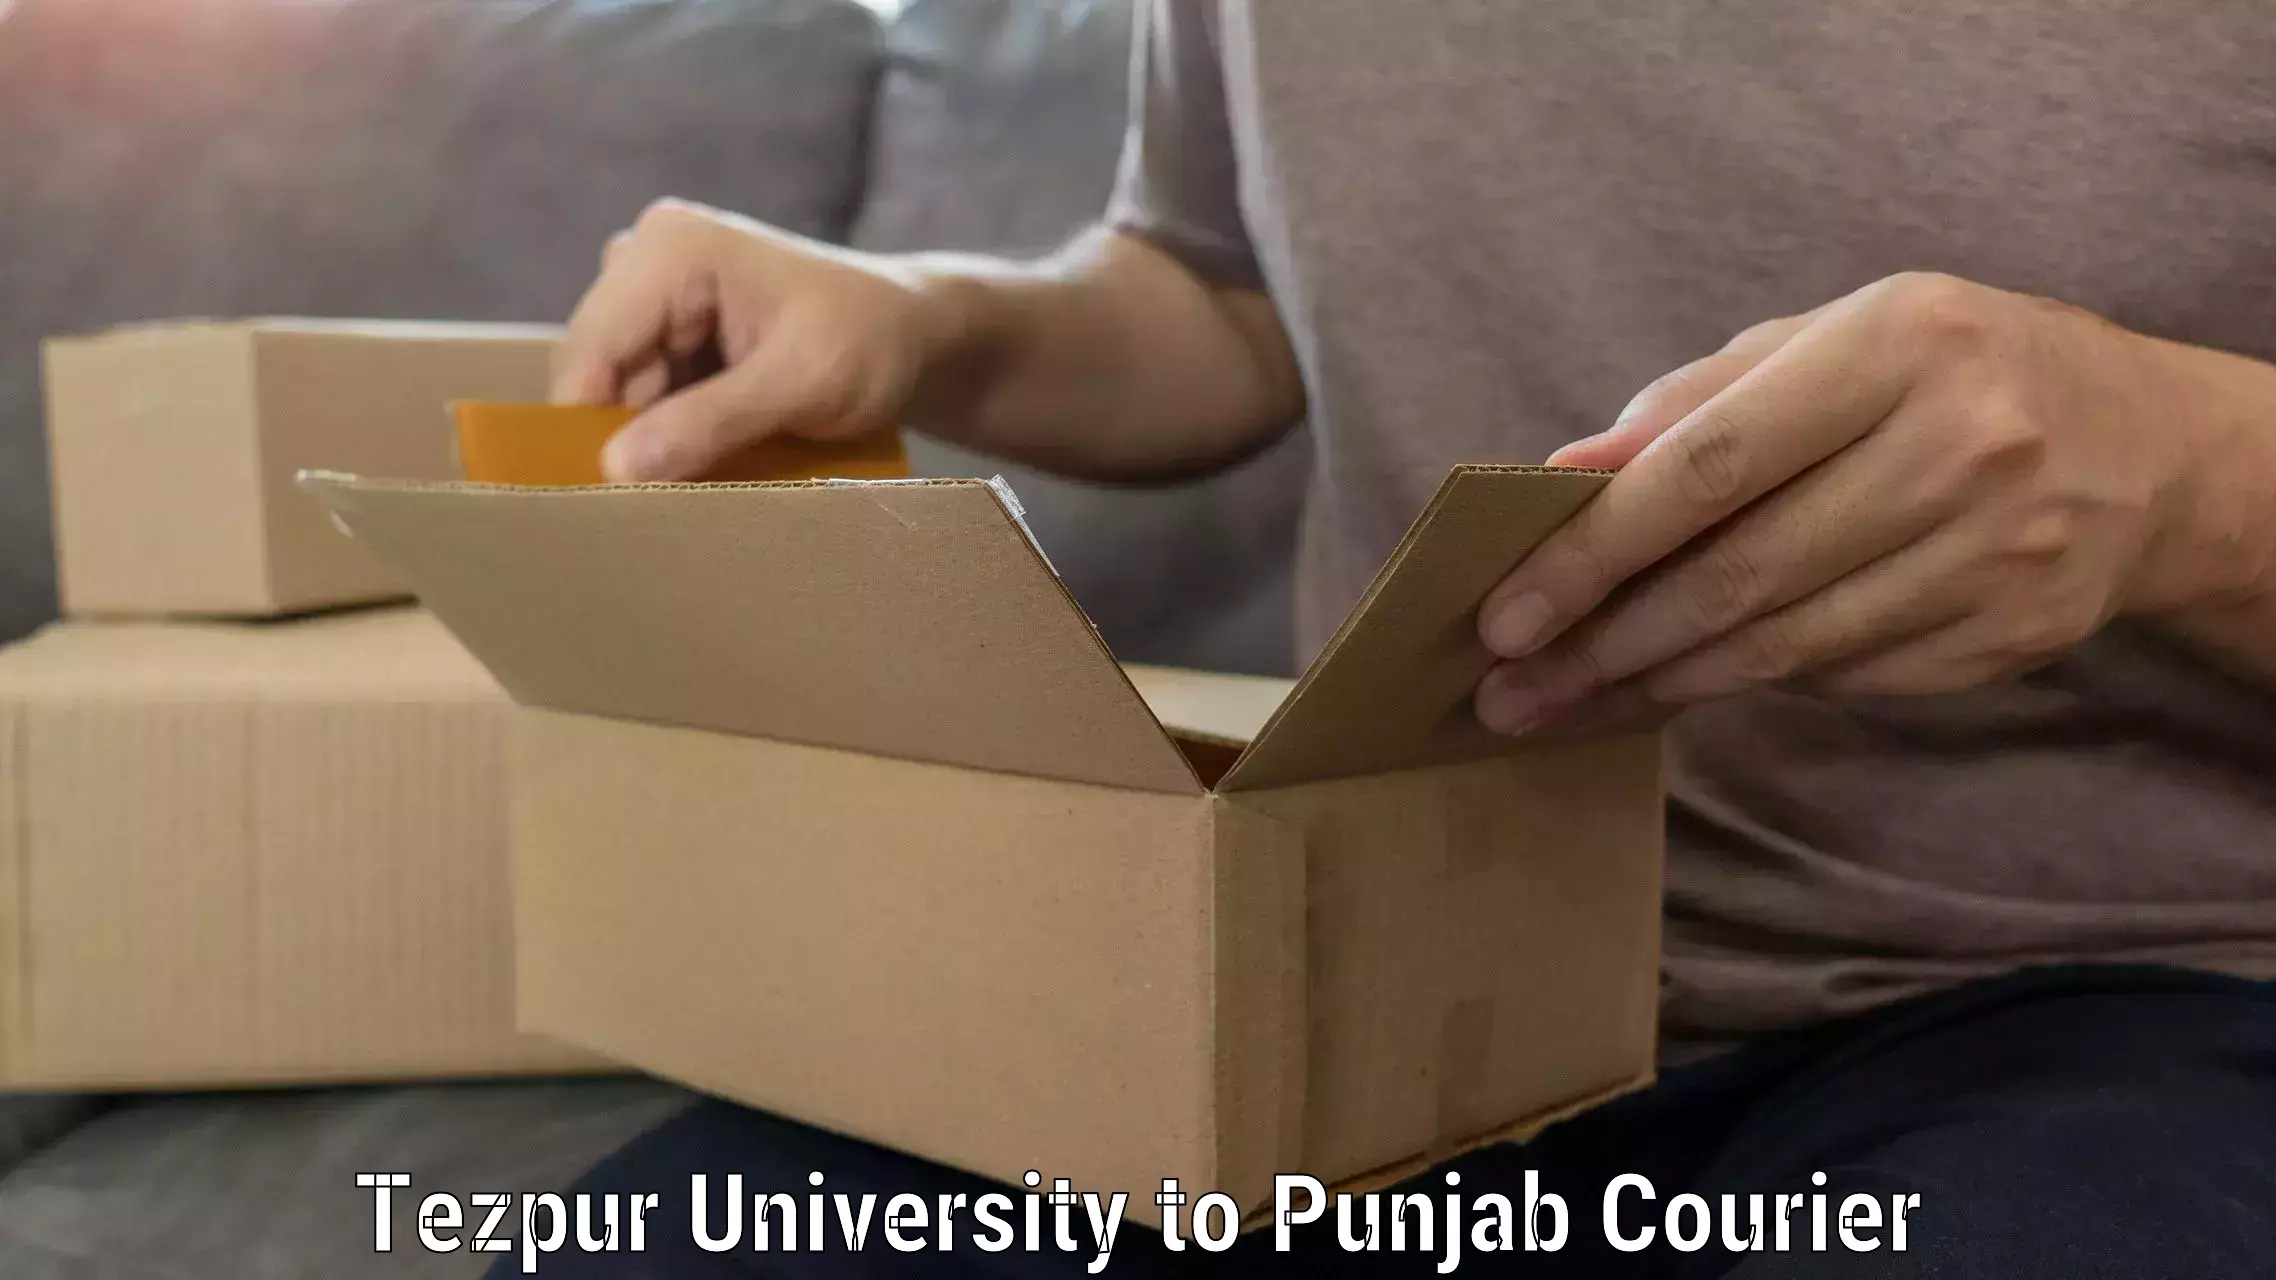 Furniture moving assistance Tezpur University to Punjab